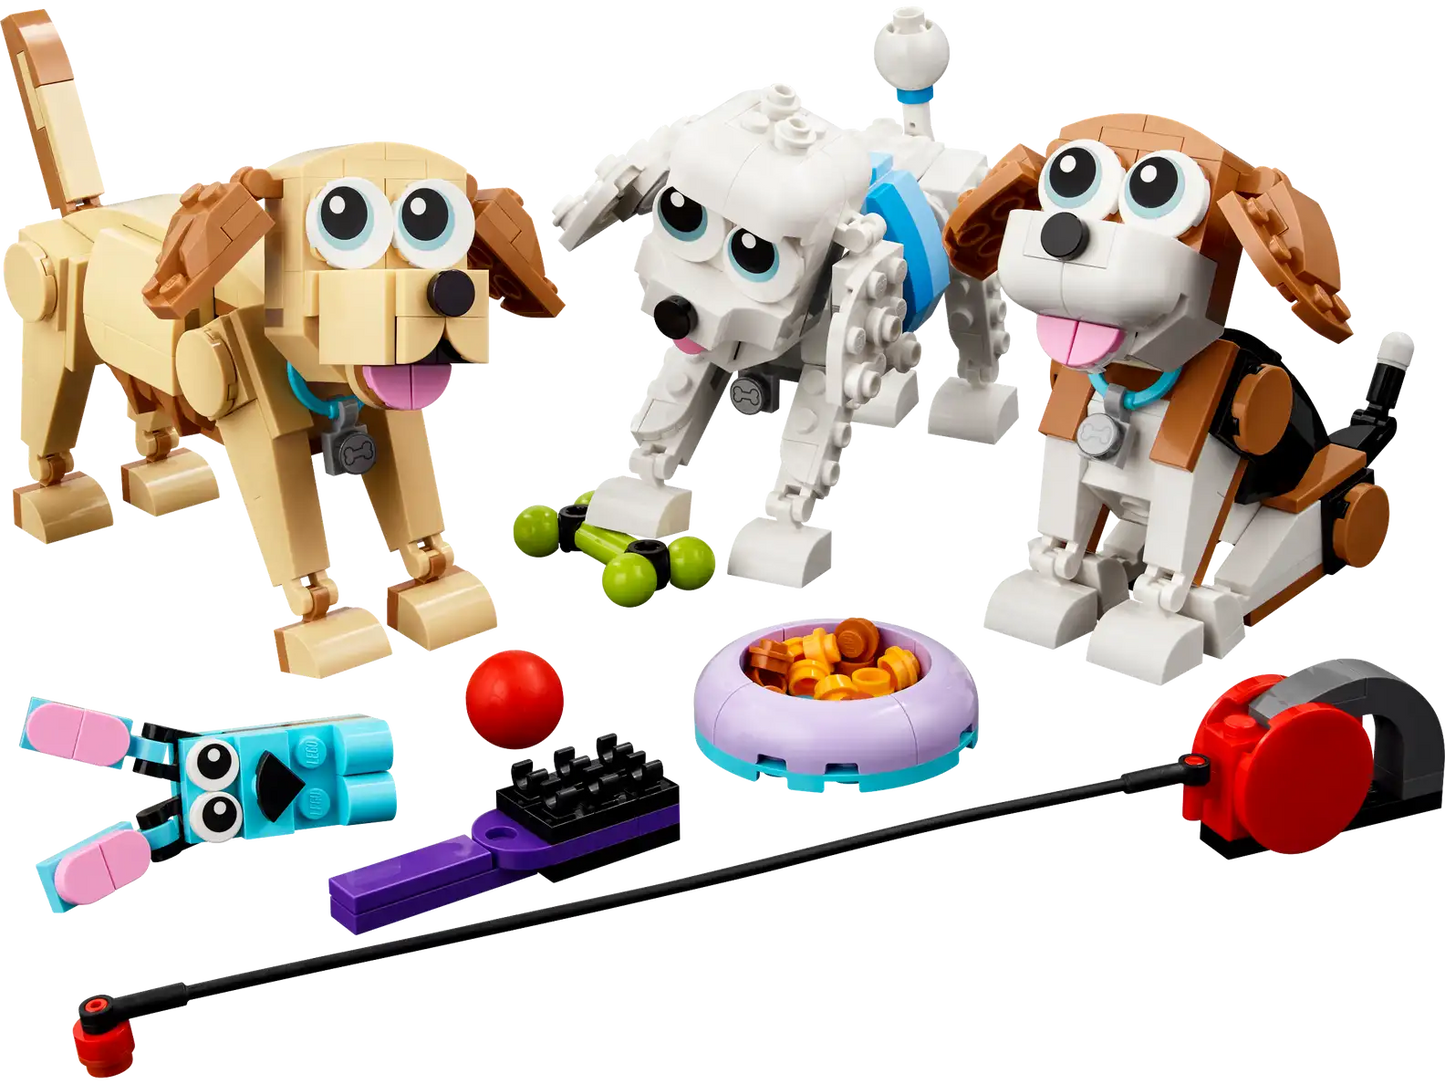 Lego Creator Dogs 31137